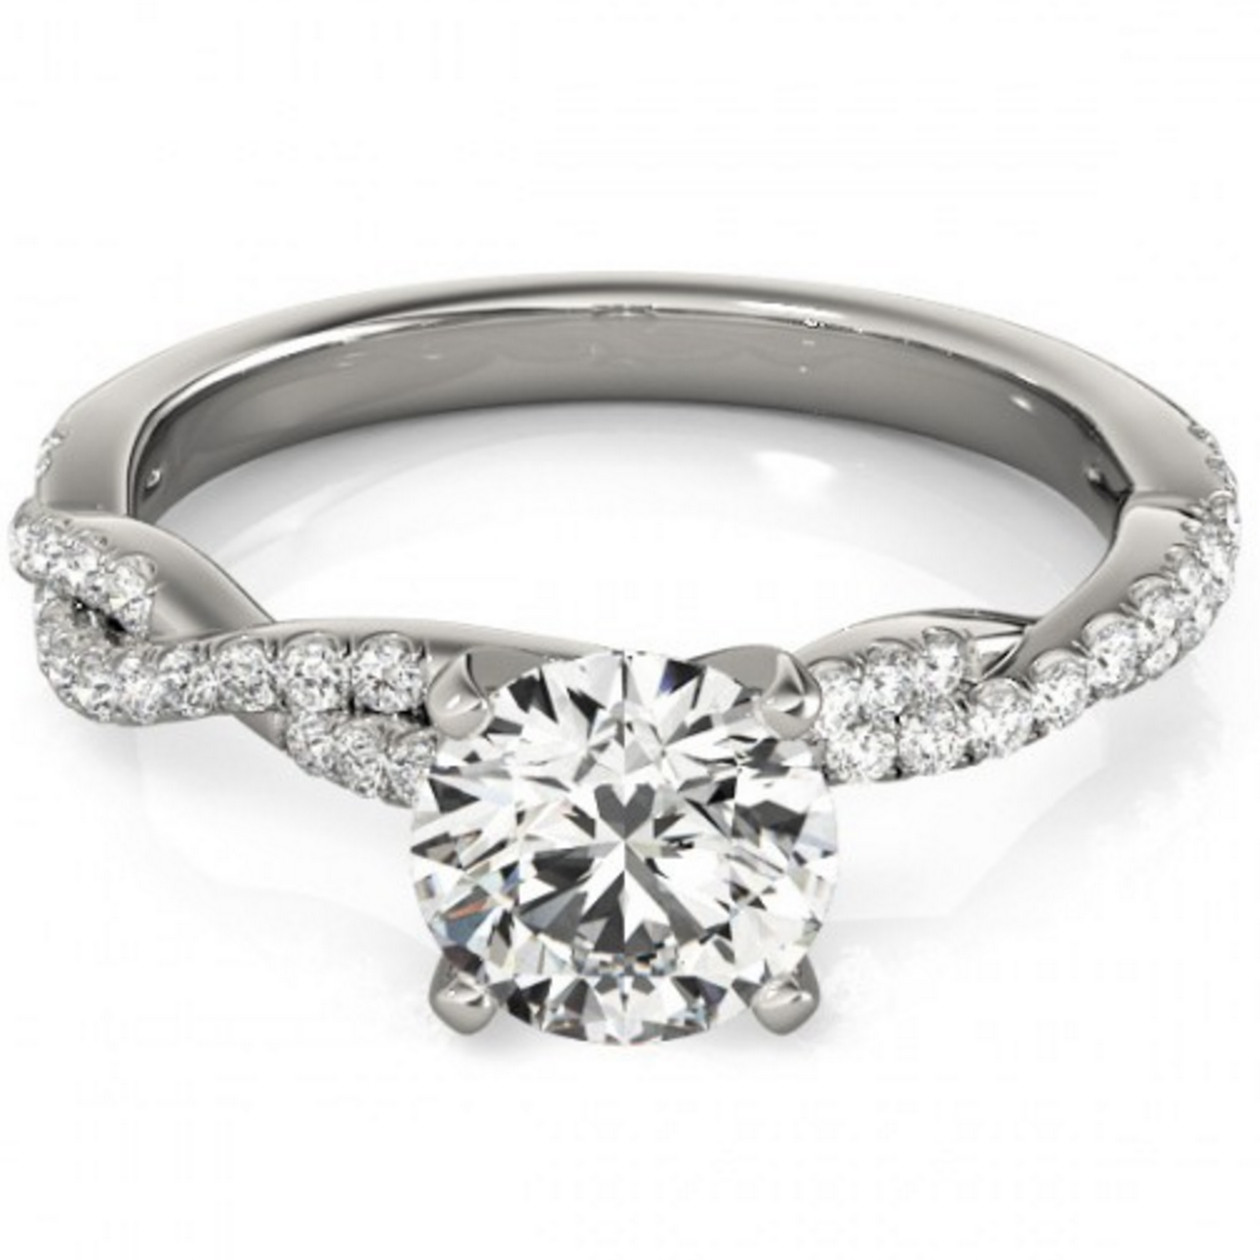 Diamond Infinity Engagement Ring
 1 2ct Diamond Engagement Ring Infinity Twist 14k White